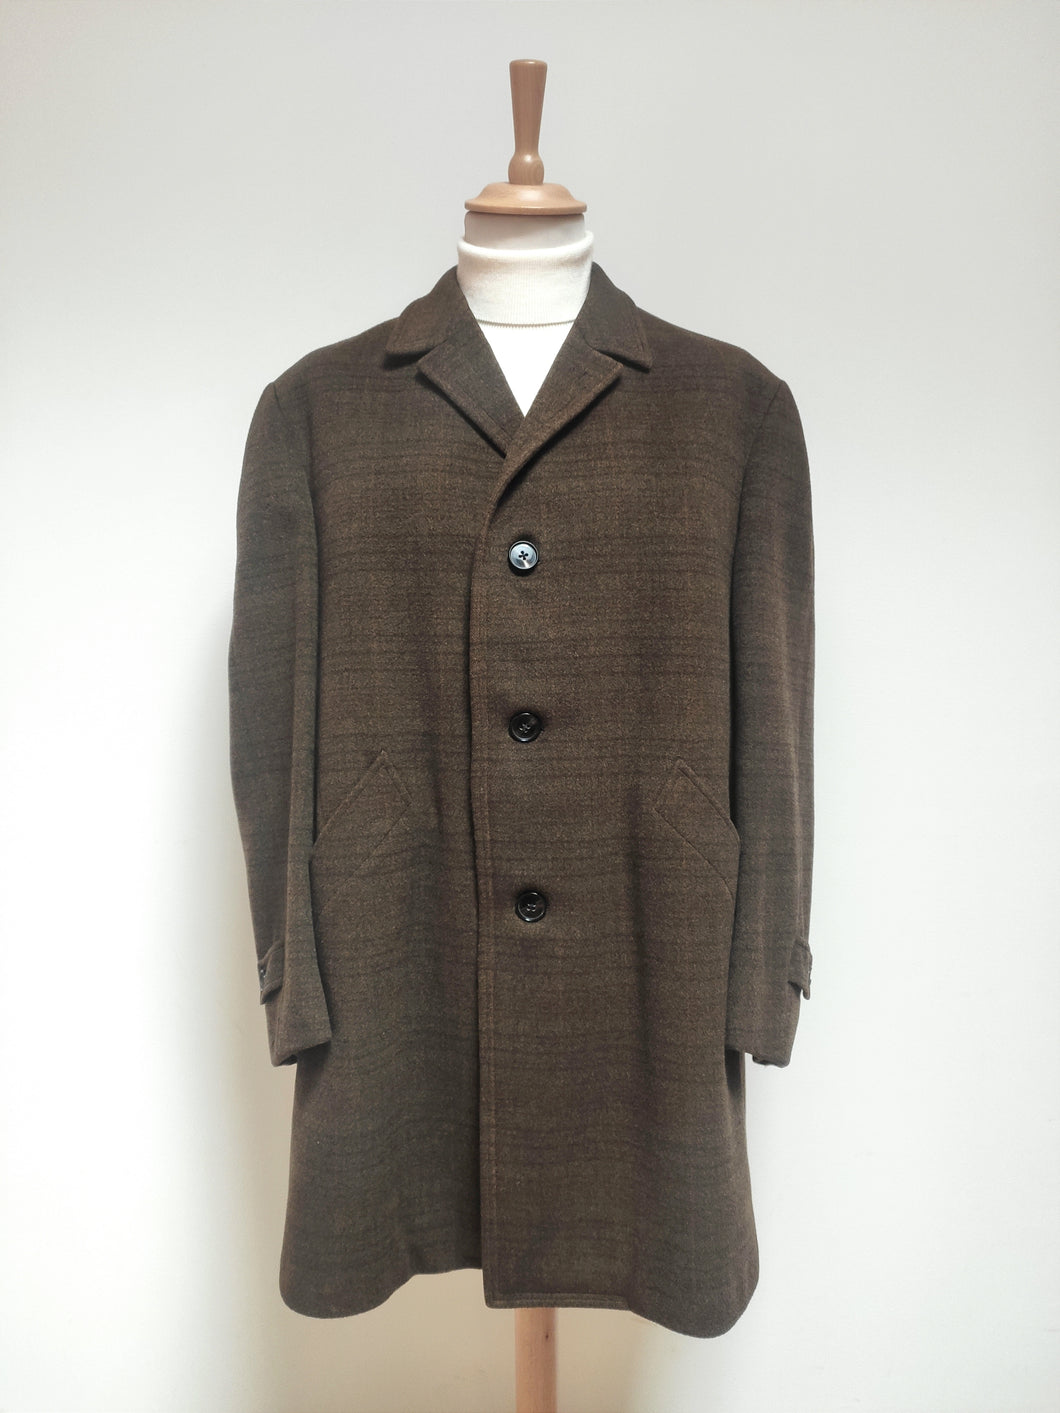 Everwell manteau à carreaux en pure laine Made in France 48